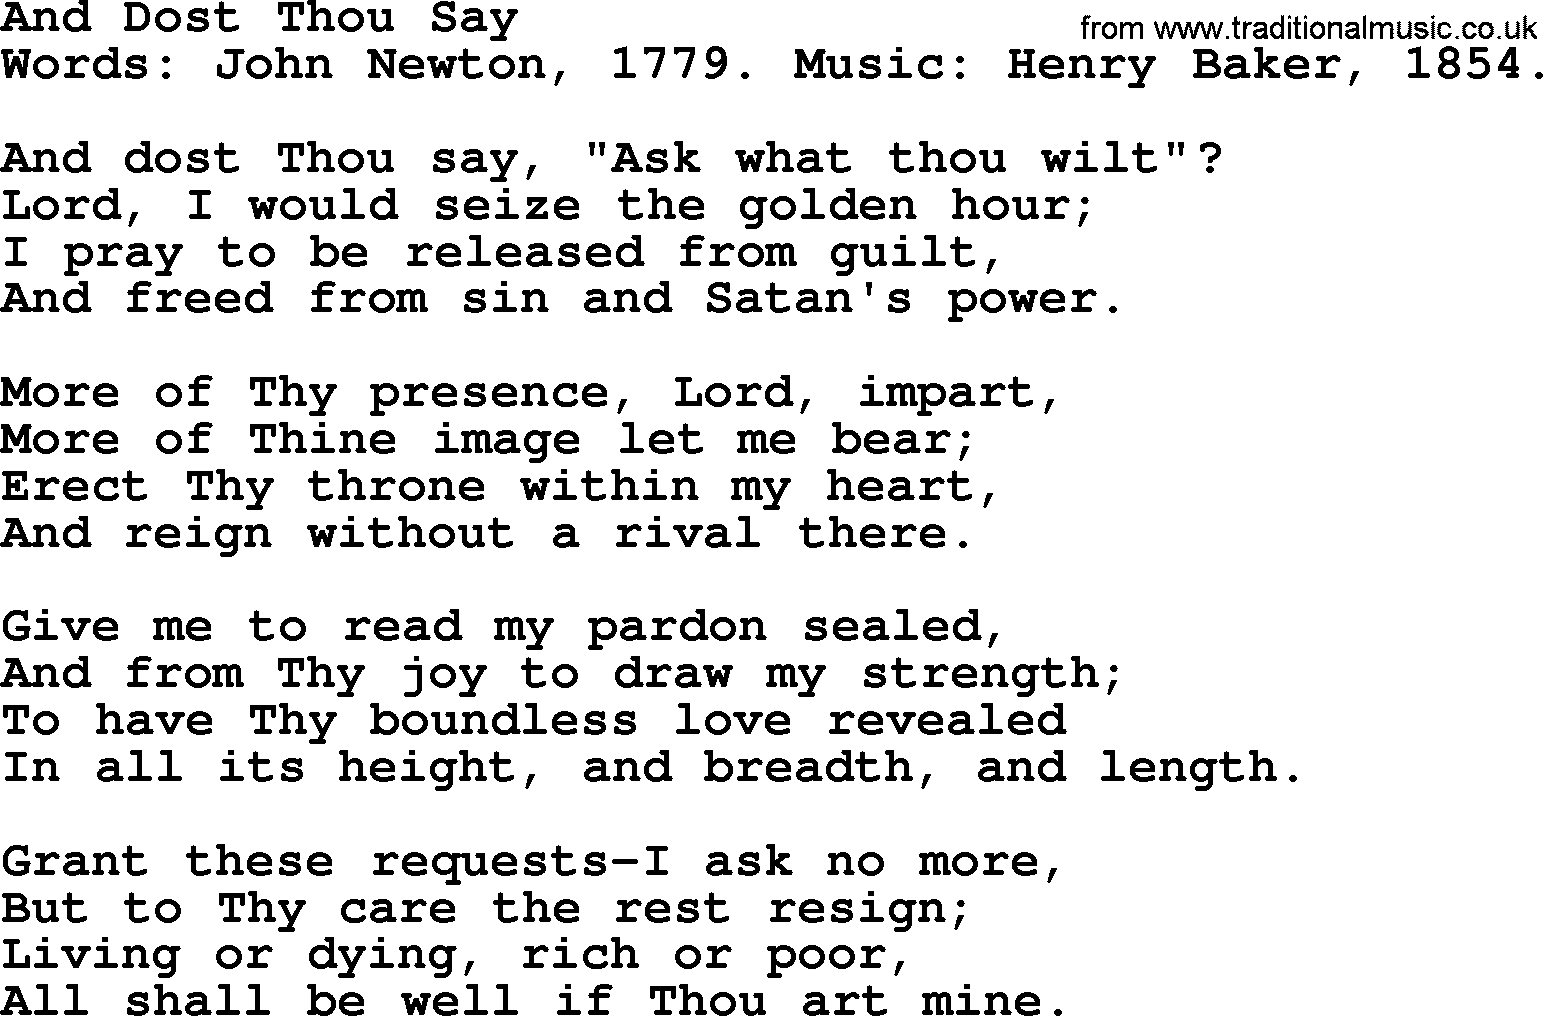 John Newton hymn: And Dost Thou Say, lyrics